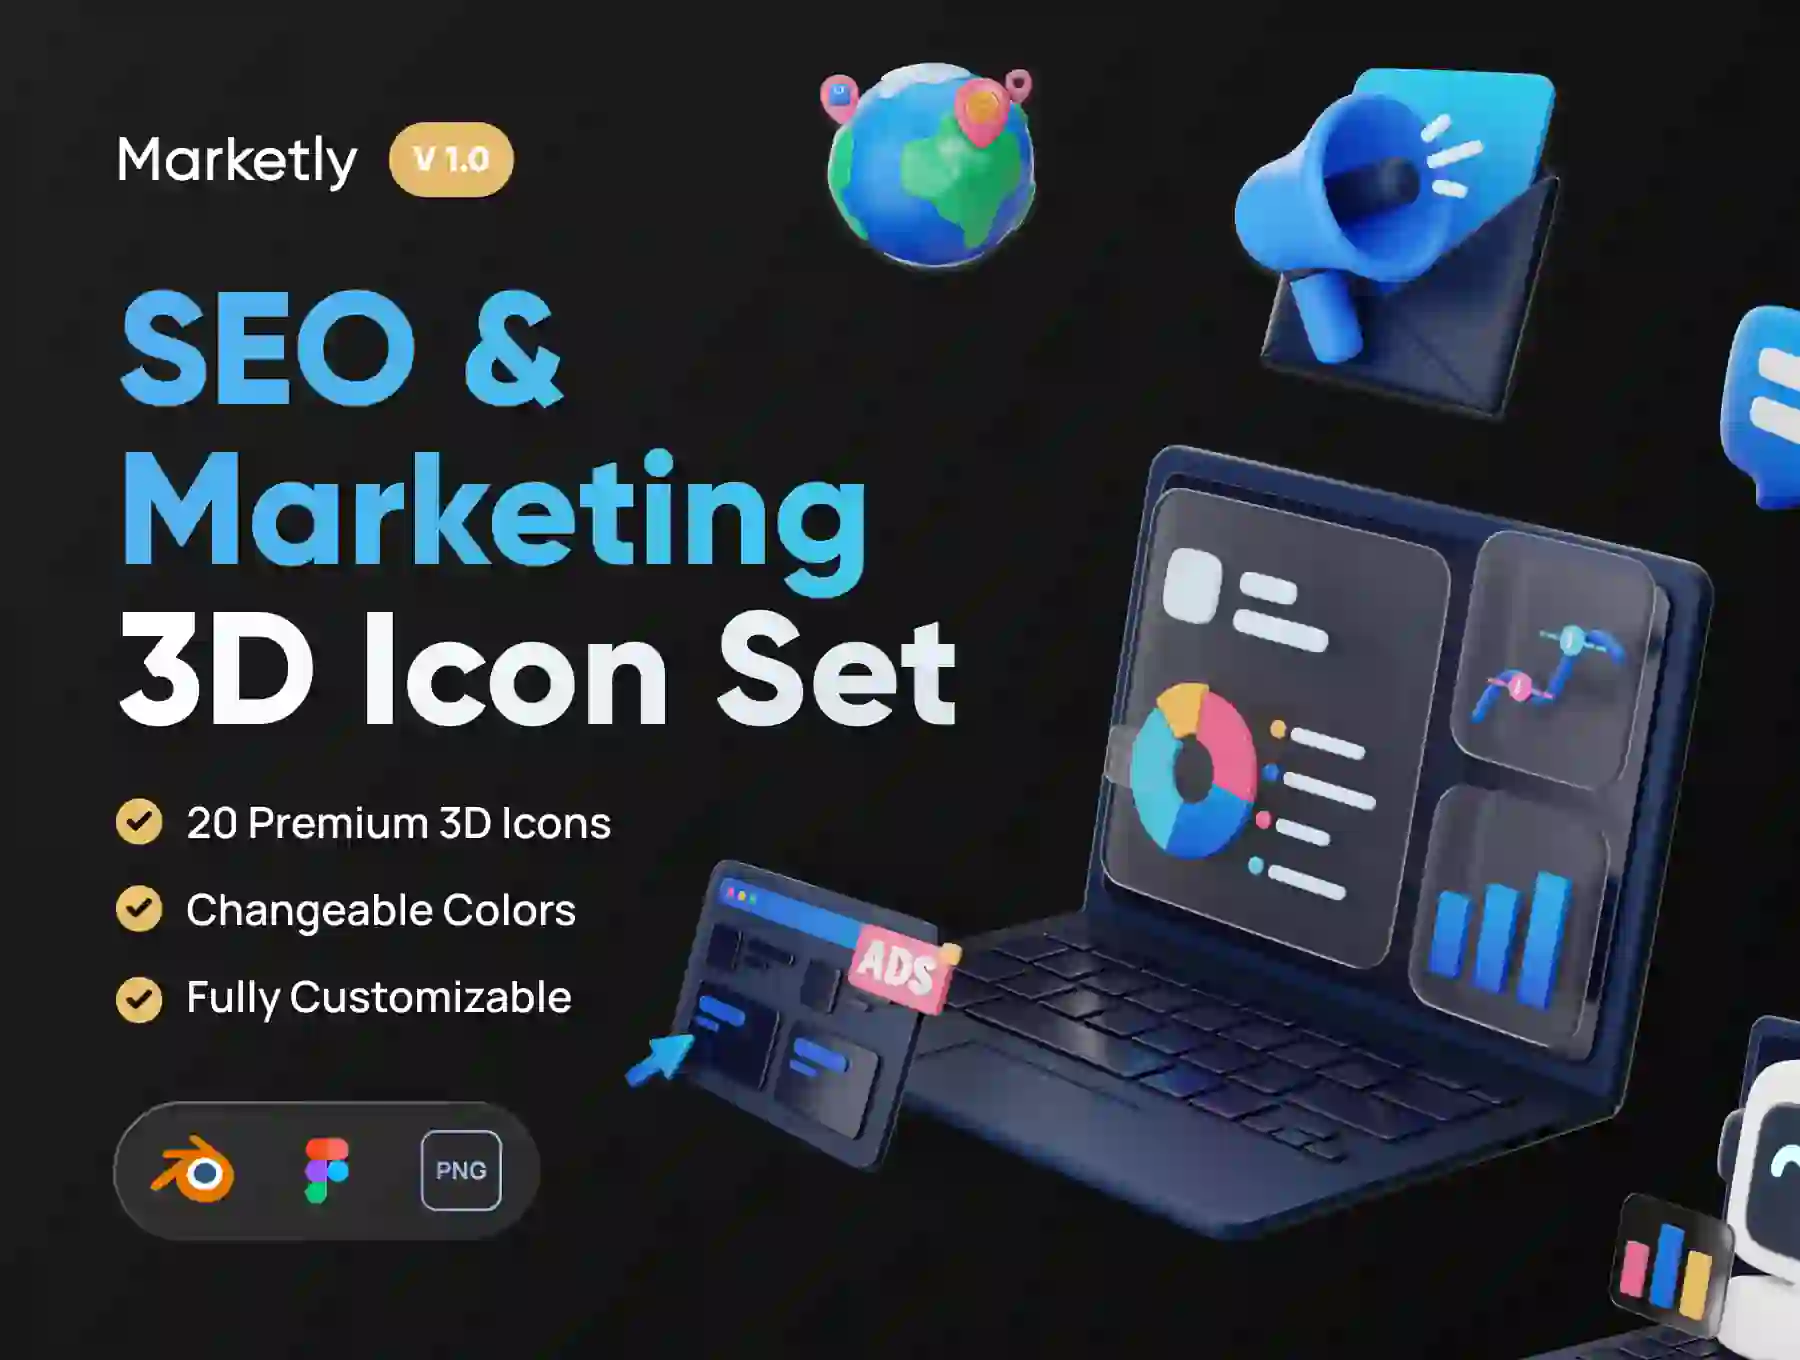 Marketly - SEO & Marketing 3D Icon Set